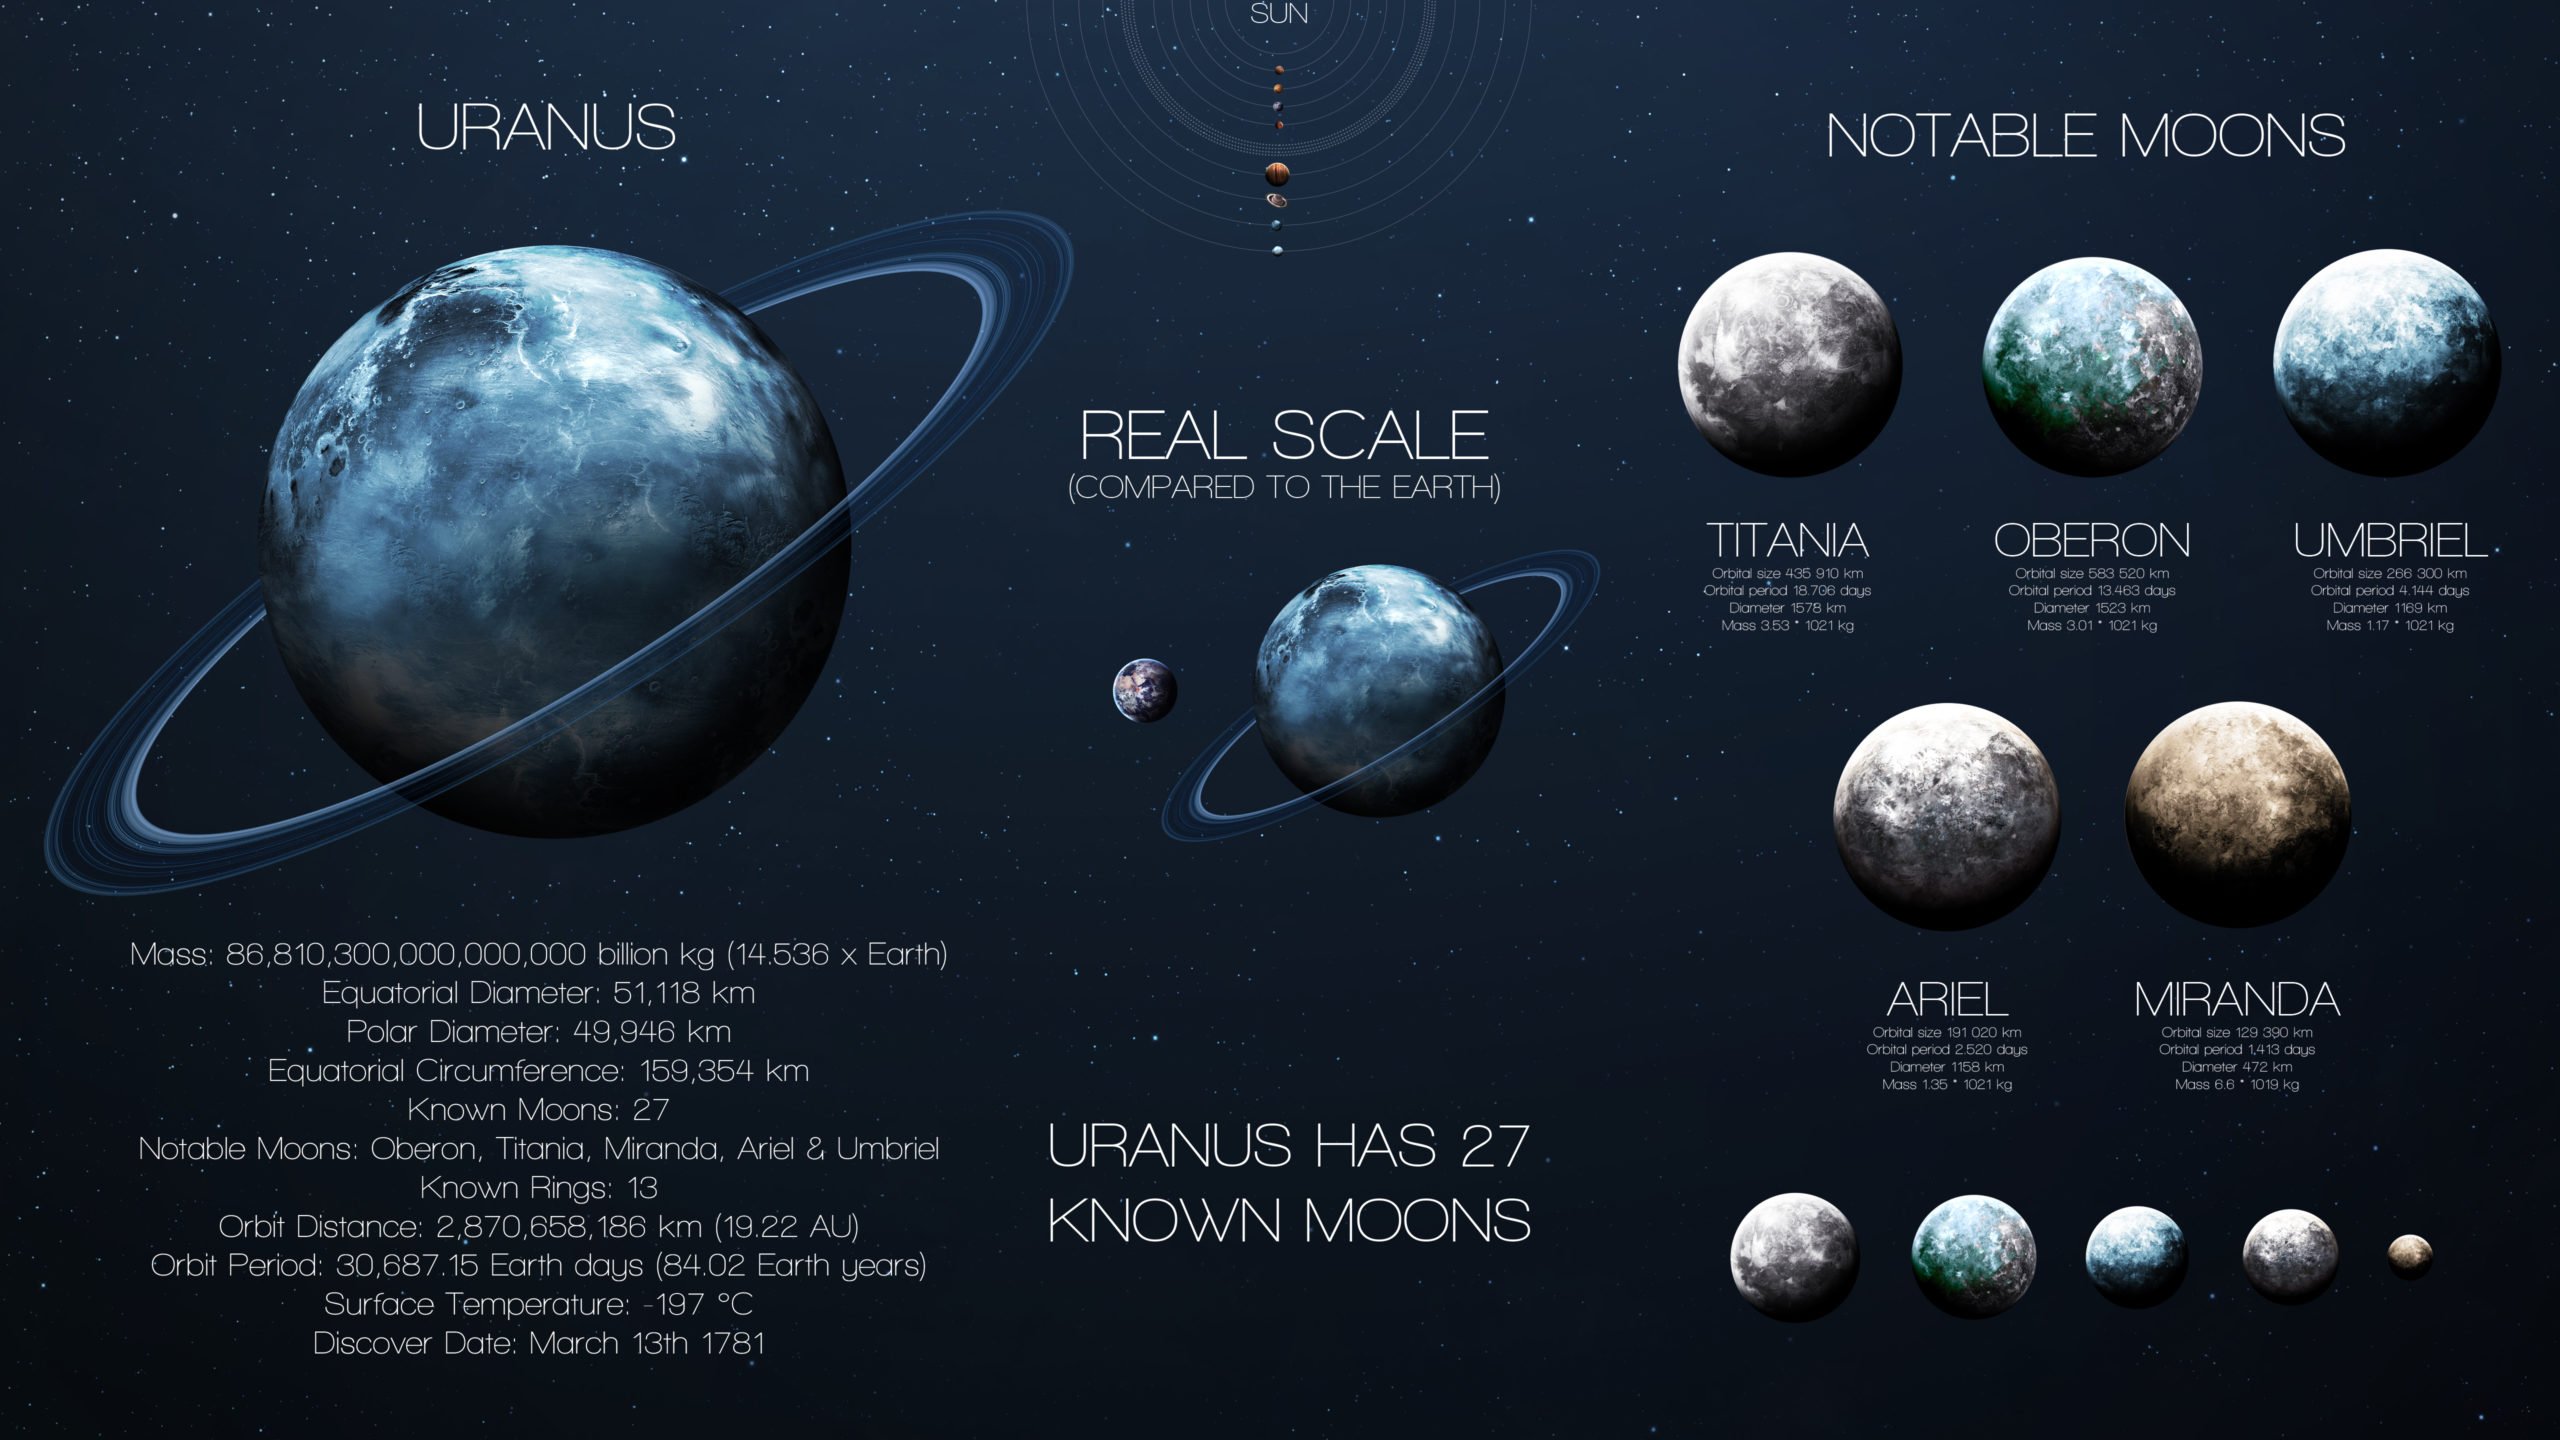 Uranus/Ariel - Earth/Moon Size Comparison